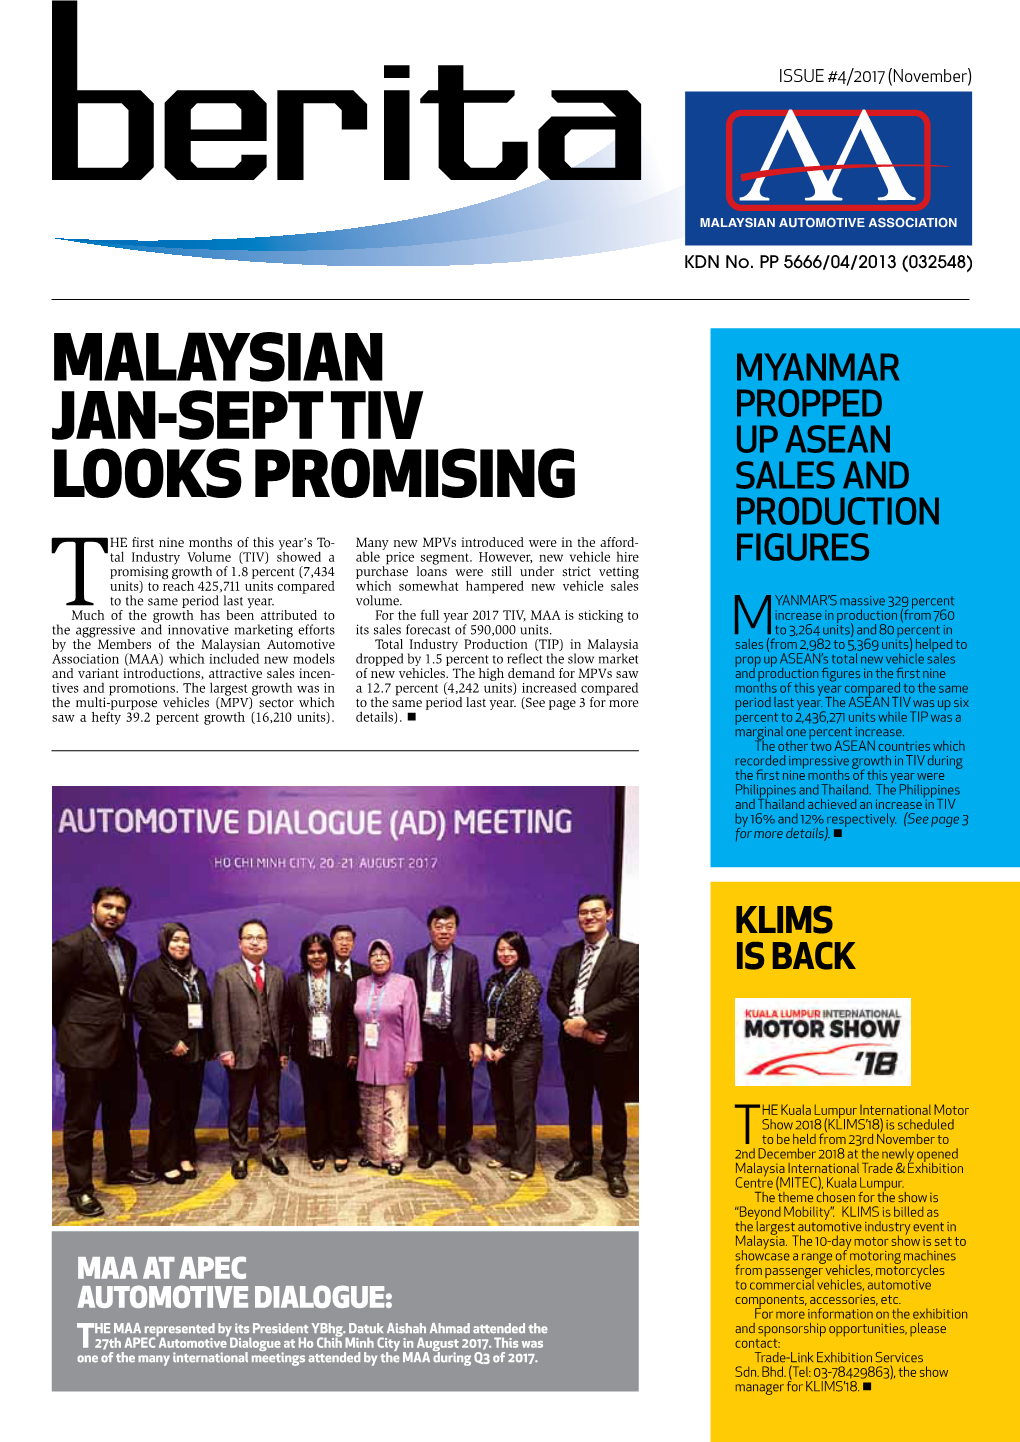 Malaysian Jan-Sept Tiv Looks Promising